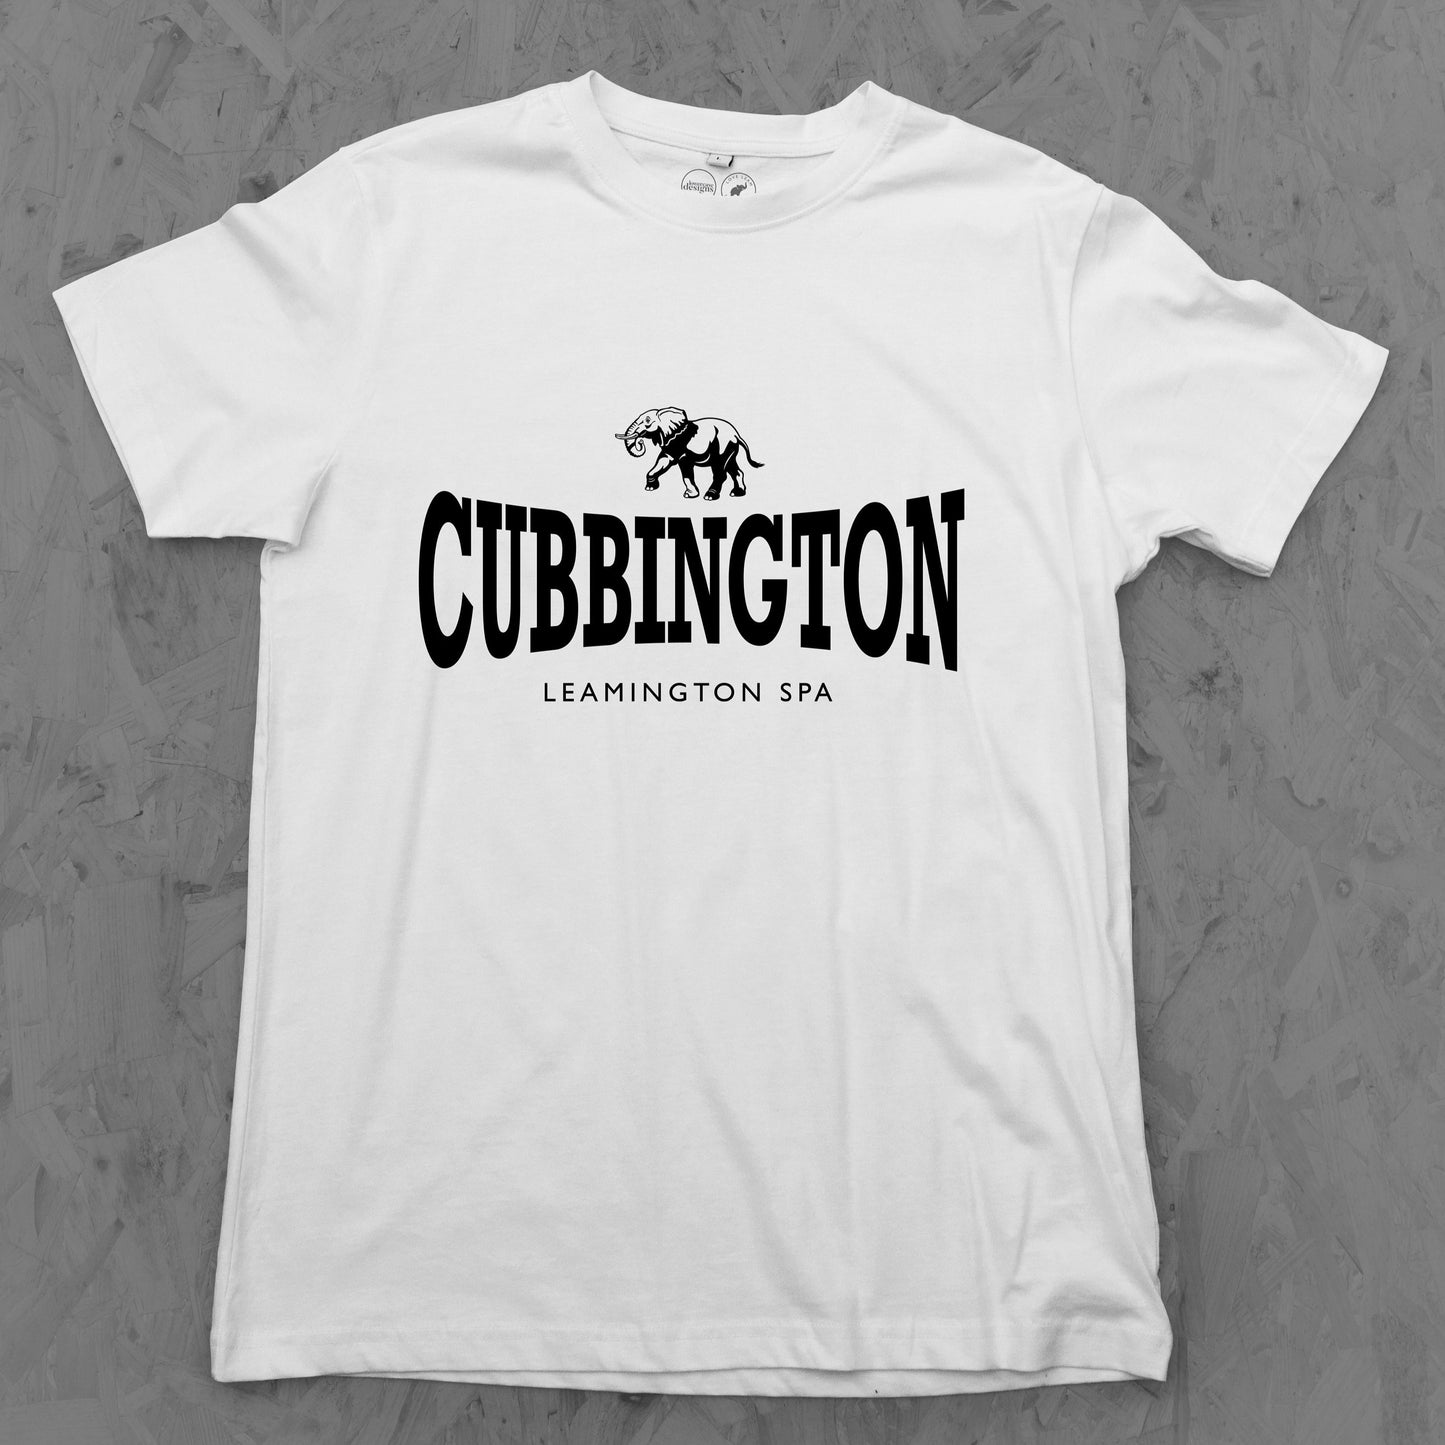 Cubbington Tee Child's sizes 3-14 years